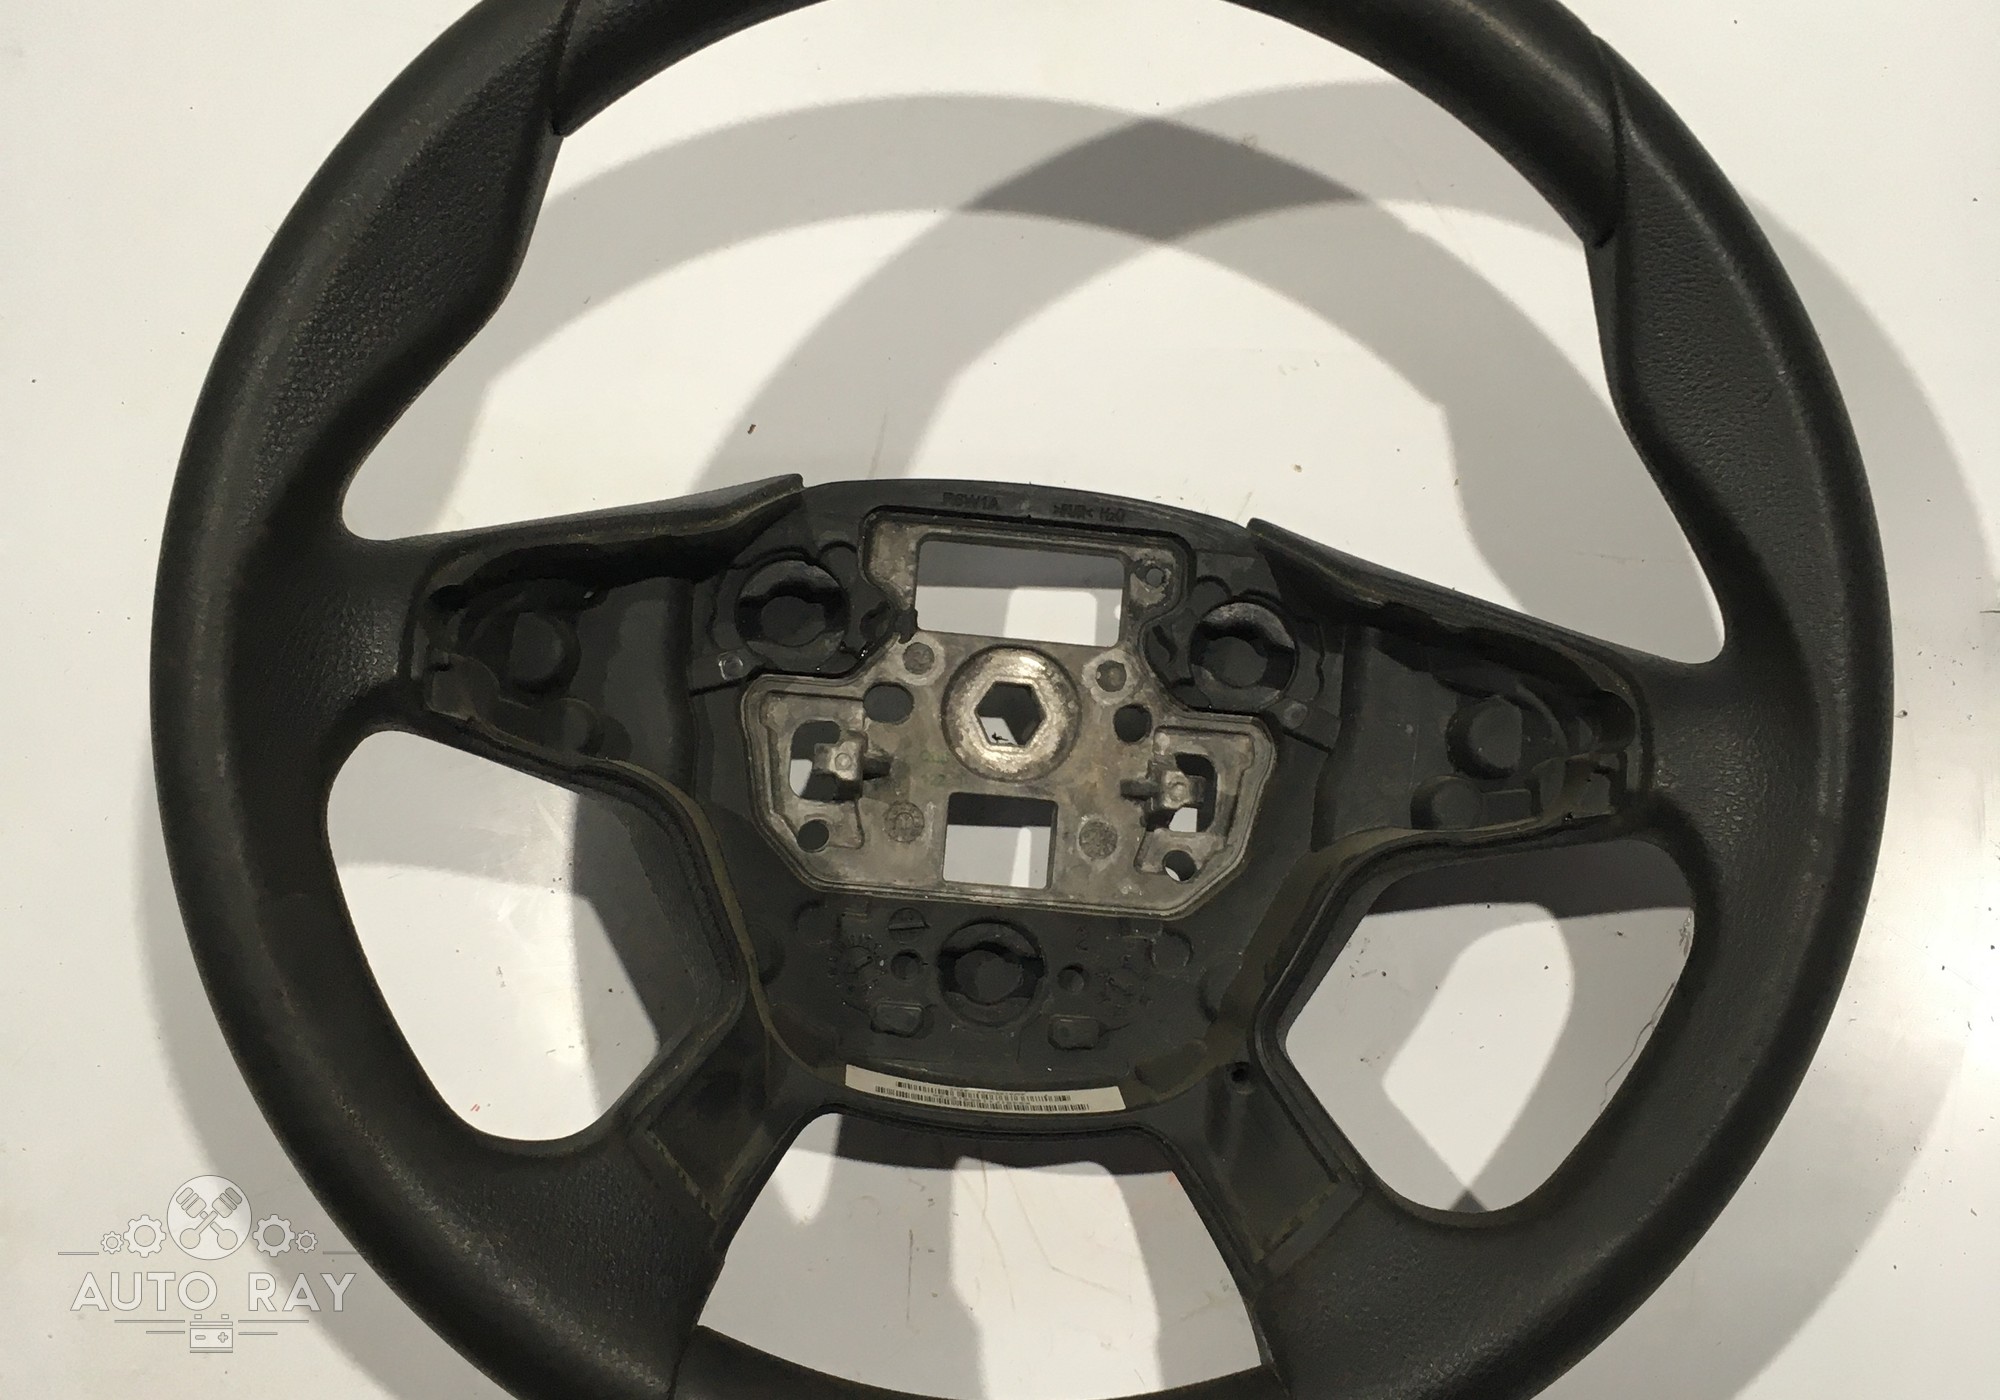 1779556 Рулевое колесо для AIR BAG (без AIR BAG) для Ford Focus III (с 2011 по 2019)